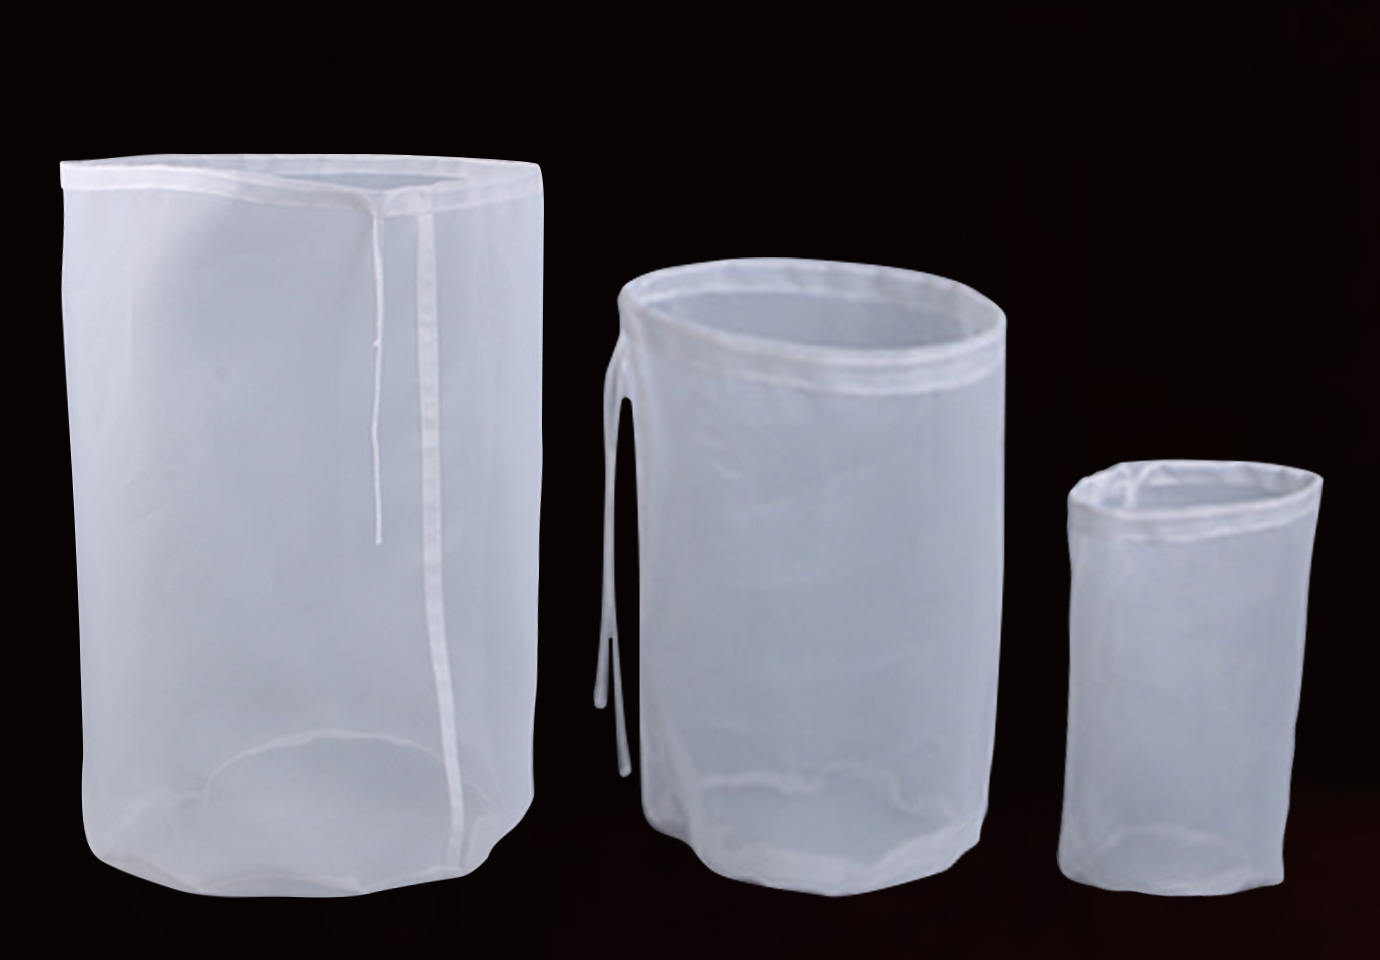 100 micron liquid bag filters